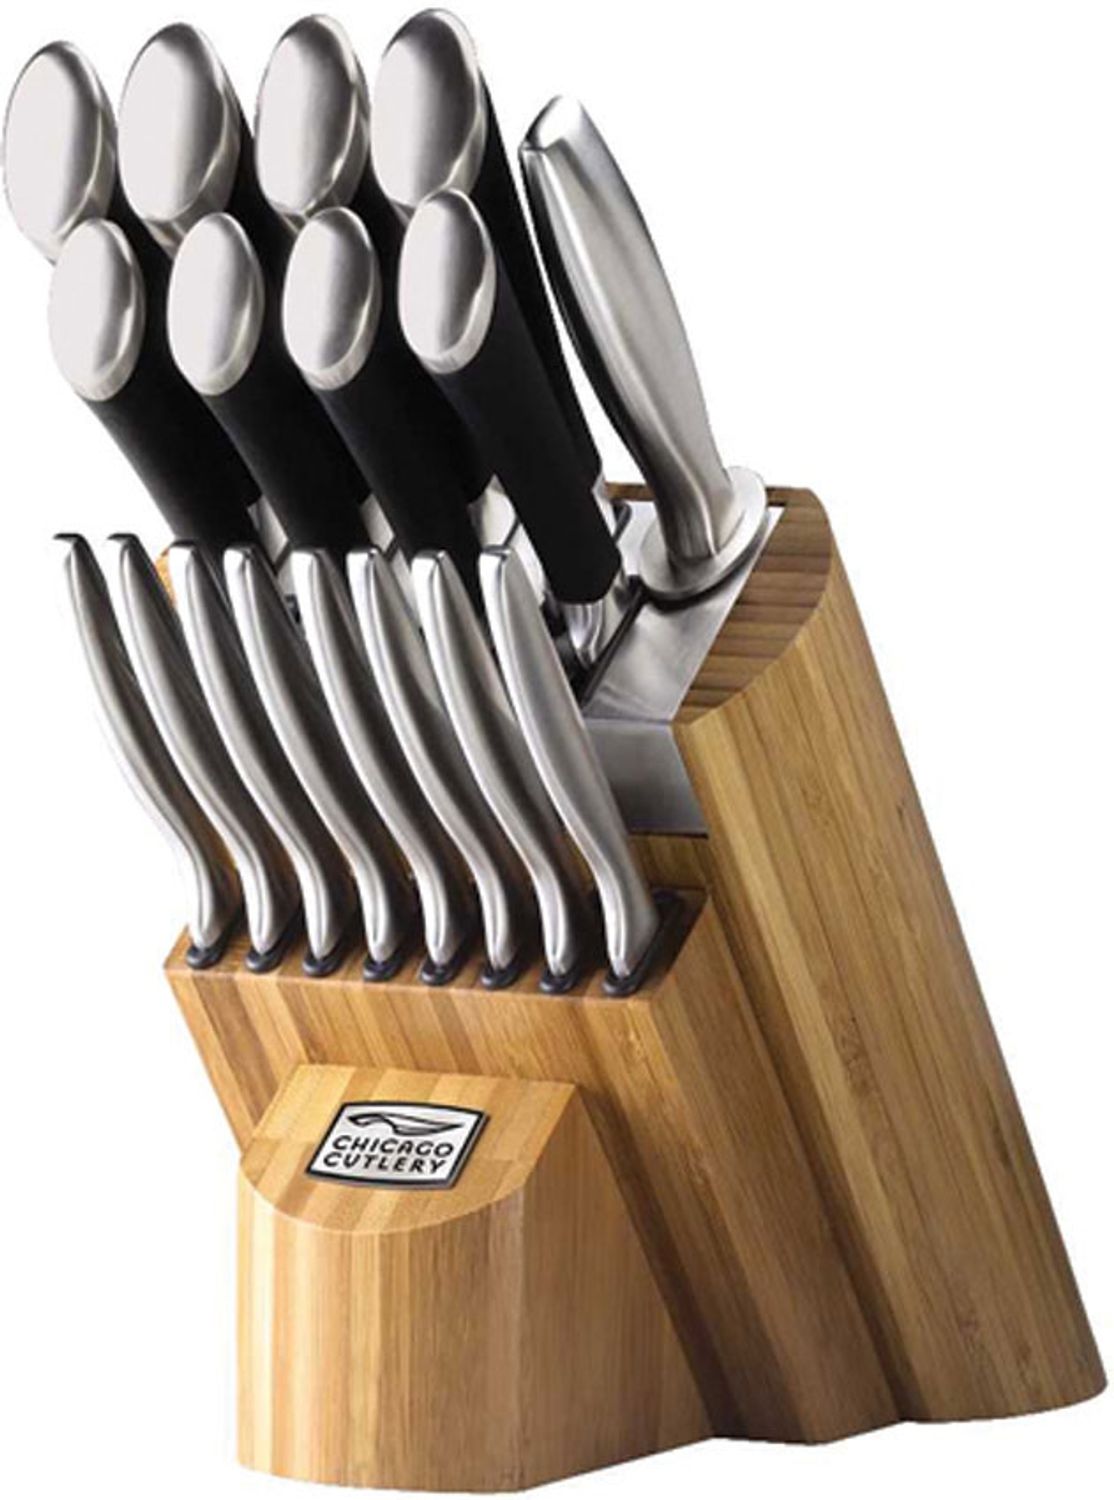 Chicago Cutlery 17 piece knife set w/ block - Cutlery & Kitchen Knives -  Milwaukee, Wisconsin, Facebook Marketplace